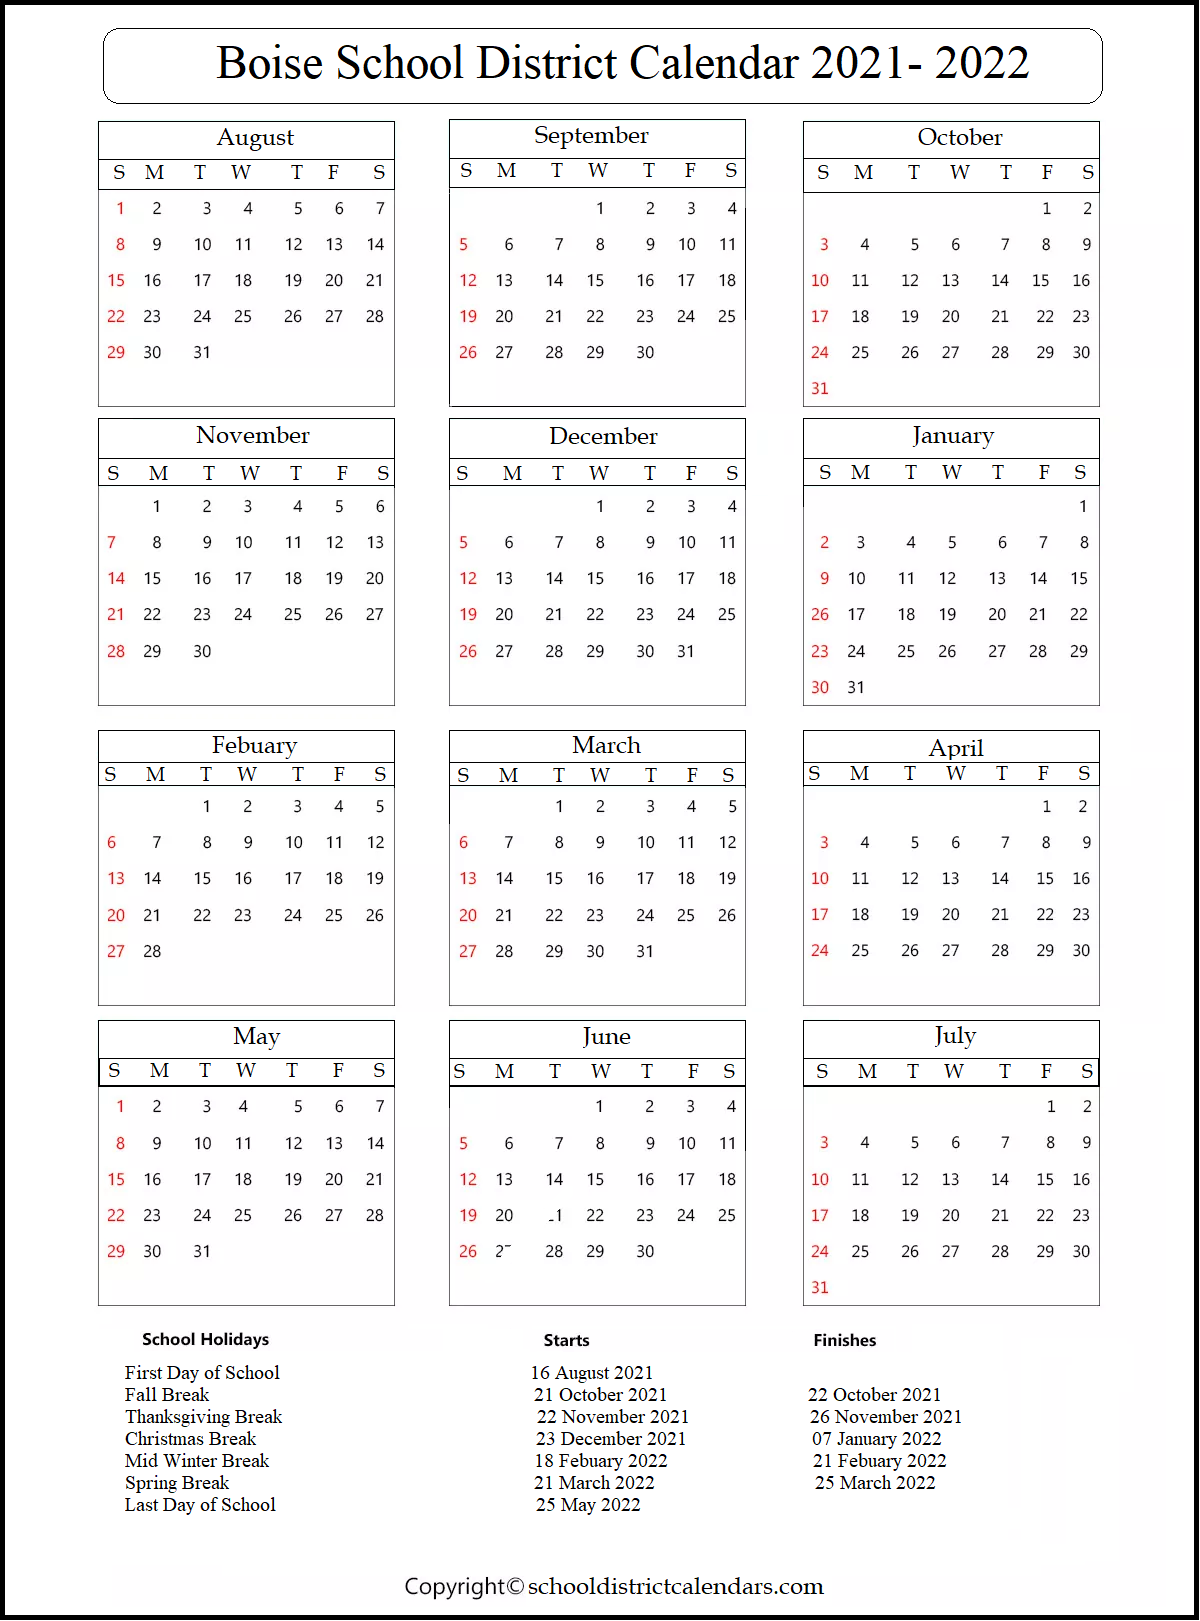 Boise School District Calendar 2021 2022 With Holidays In Pdf School District Calendars